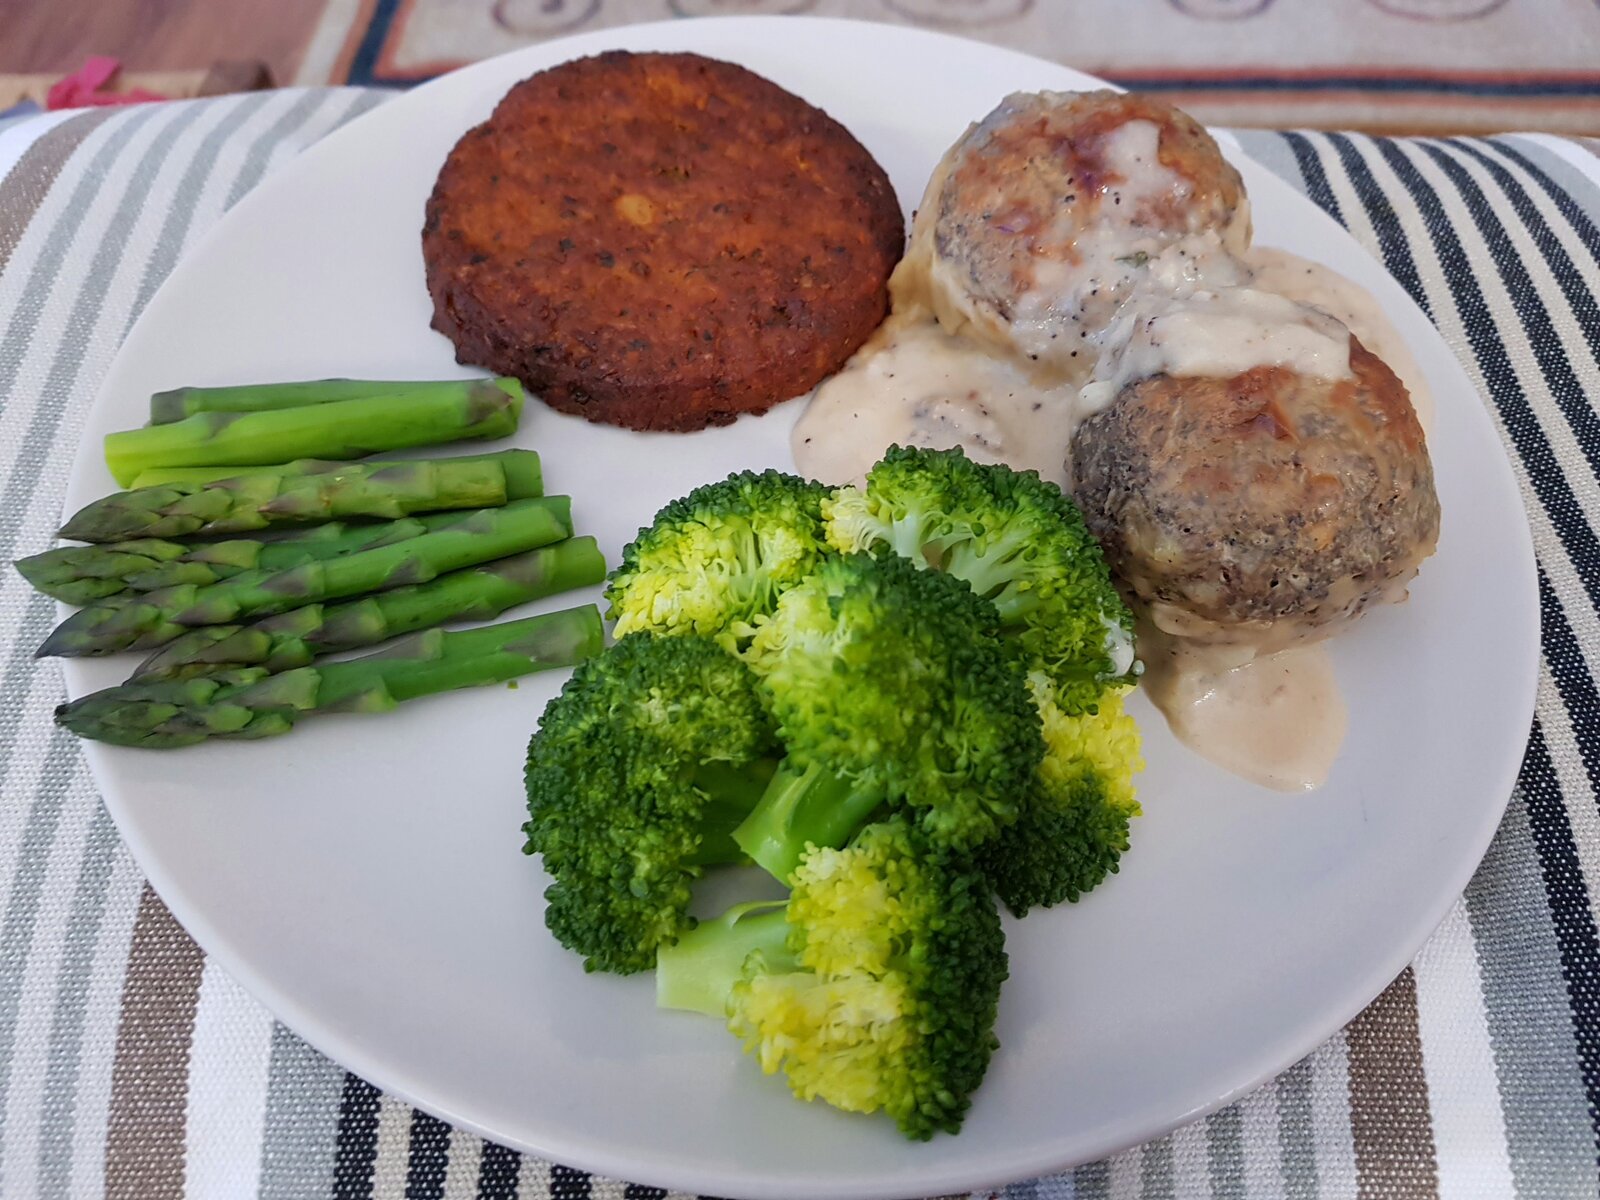 Walnut Dumplings with Bechamel sauce, veggie burger, broccoli and asparagus